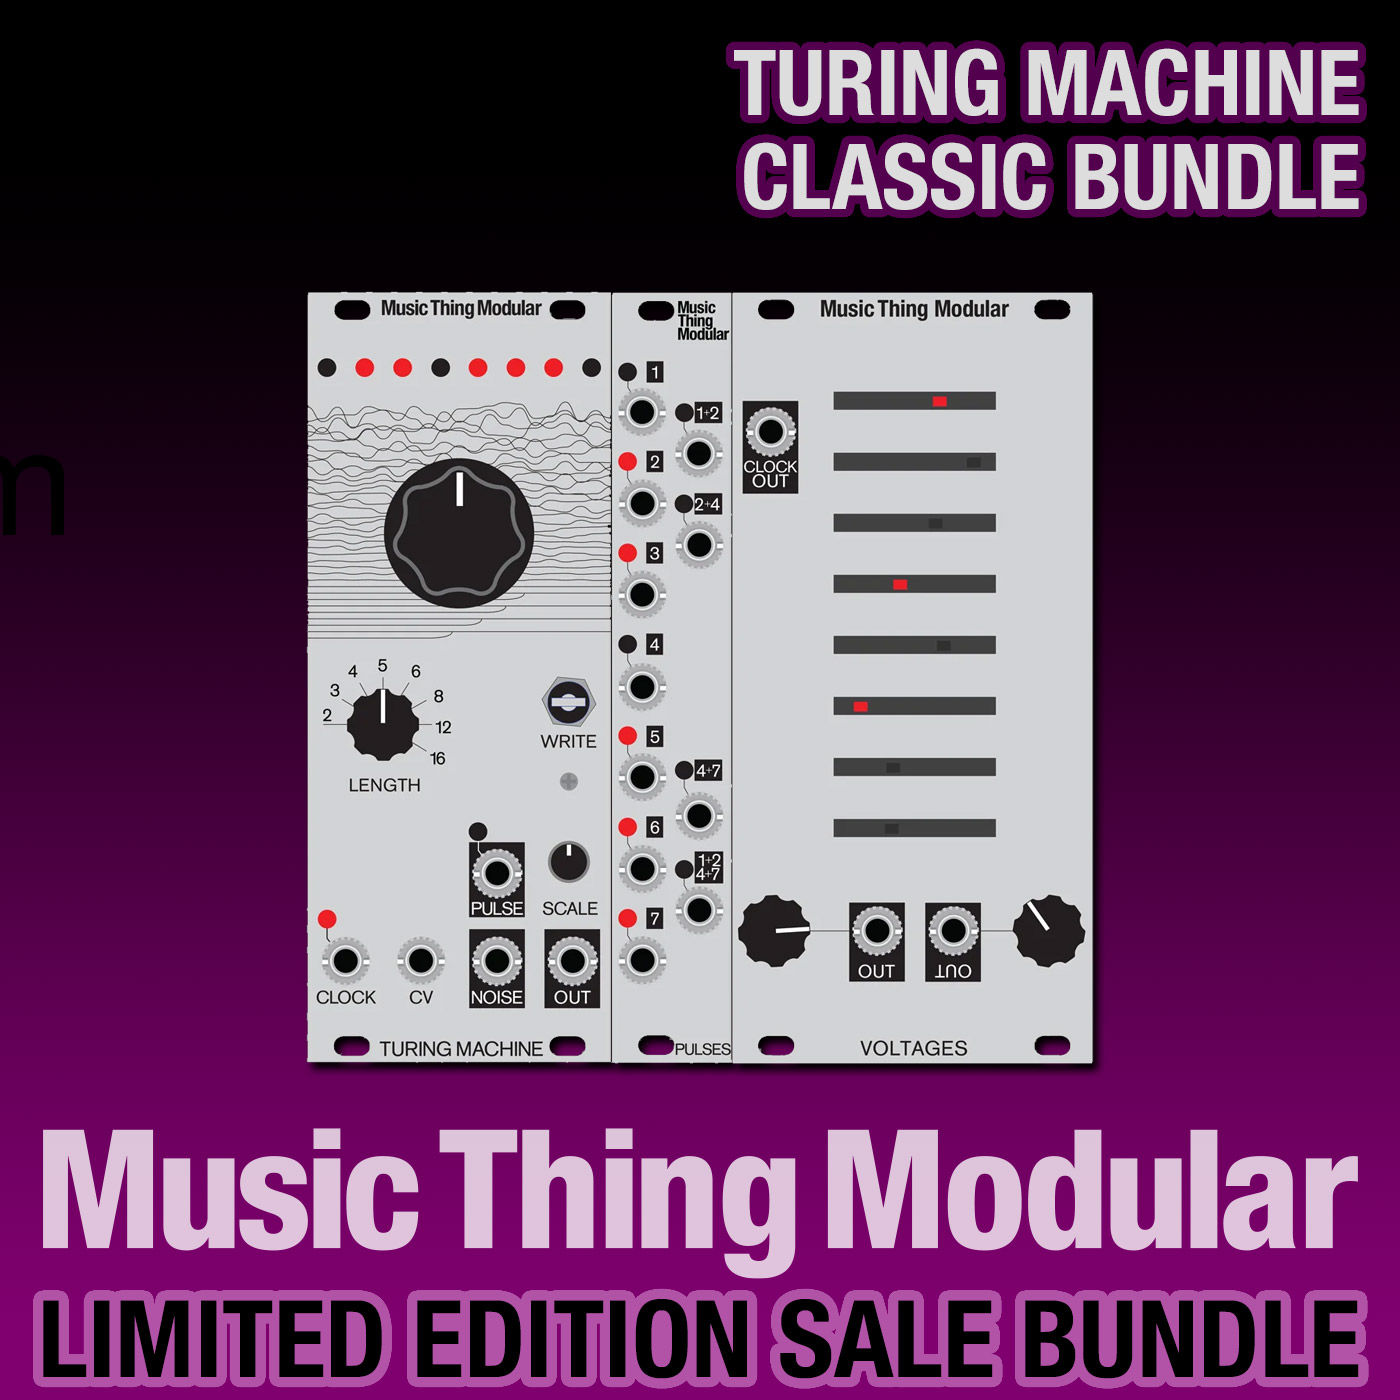 Music Thing Modular – Turing Machine Mkii Full DIY Kit – Thonk – DIY  Synthesizer Kits & Components